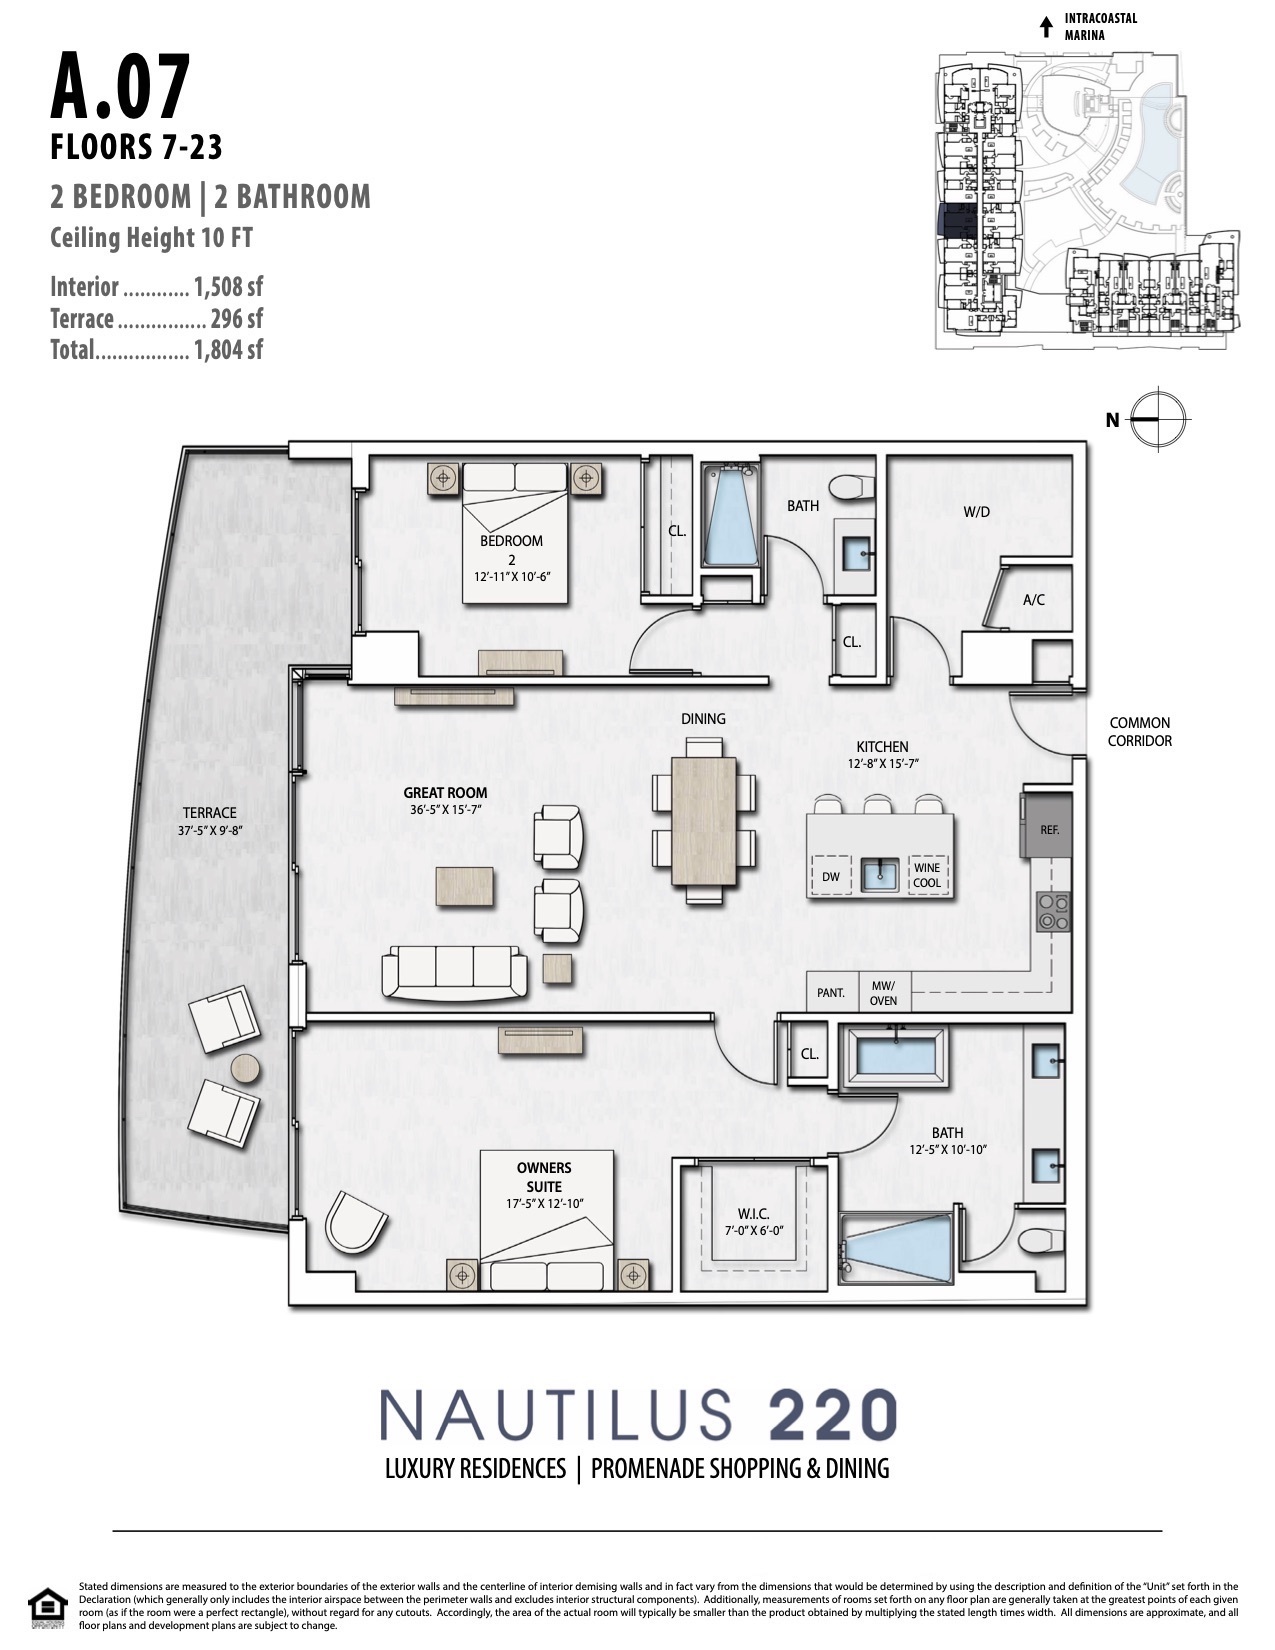 Floor Plan for Nautilus 220 Floorplans, A.07